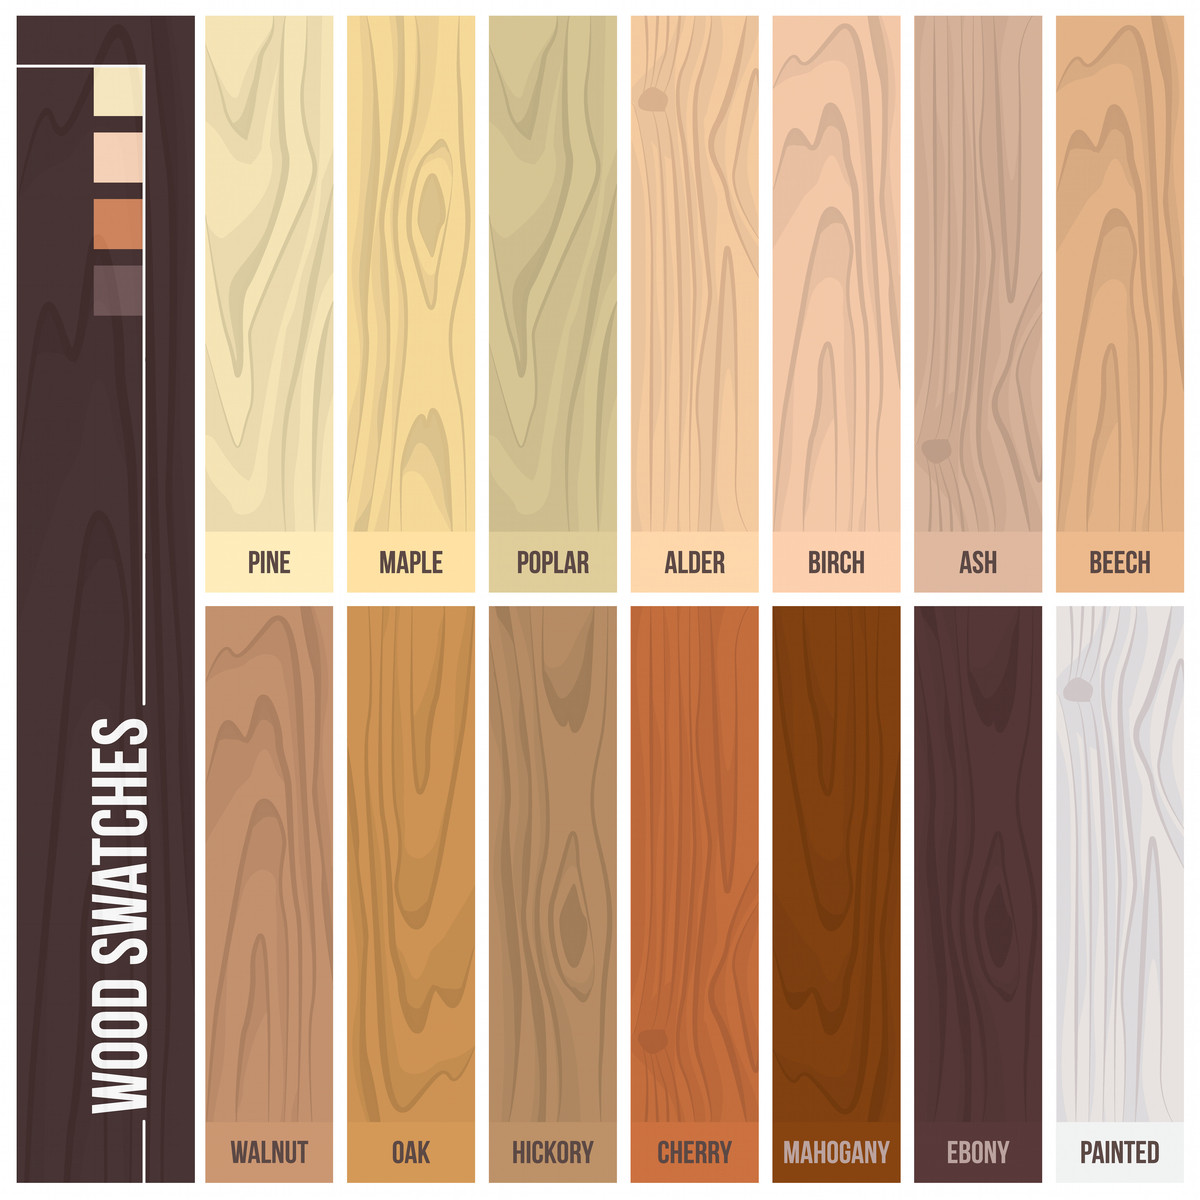 dark hardwood floor ideas of 12 types of hardwood flooring species styles edging dimensions for types of hardwood flooring illustrated guide